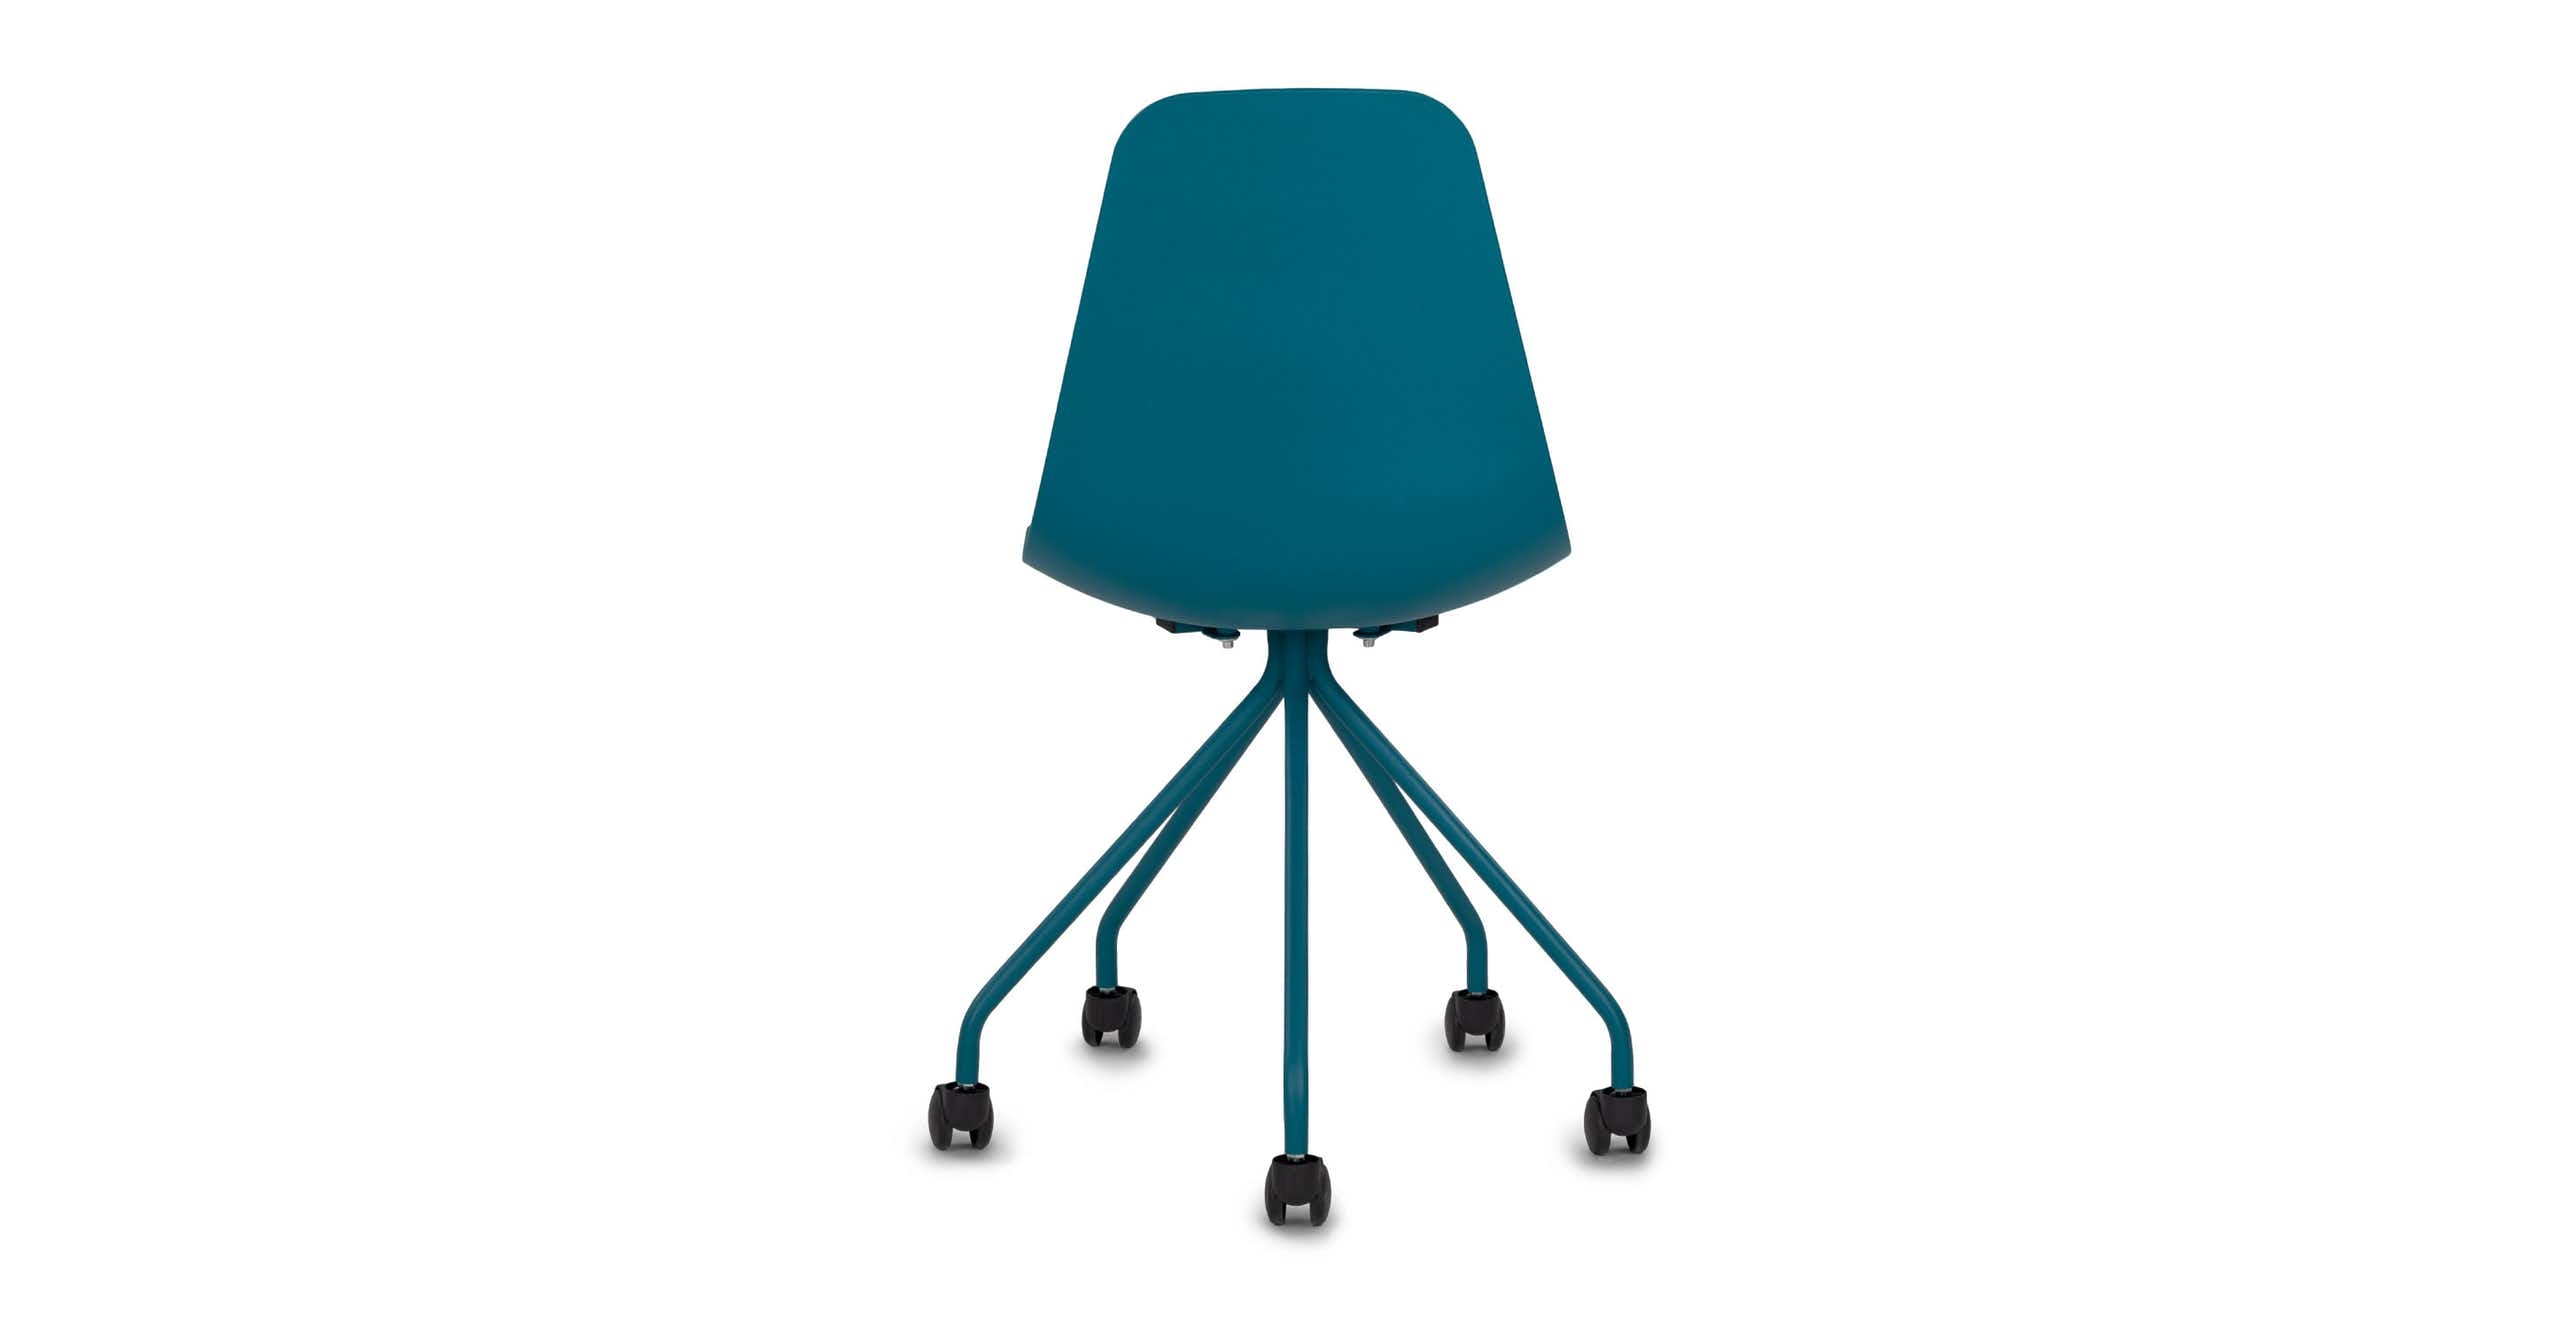 Svelti Deep Cove Teal Office Chair - Image 3